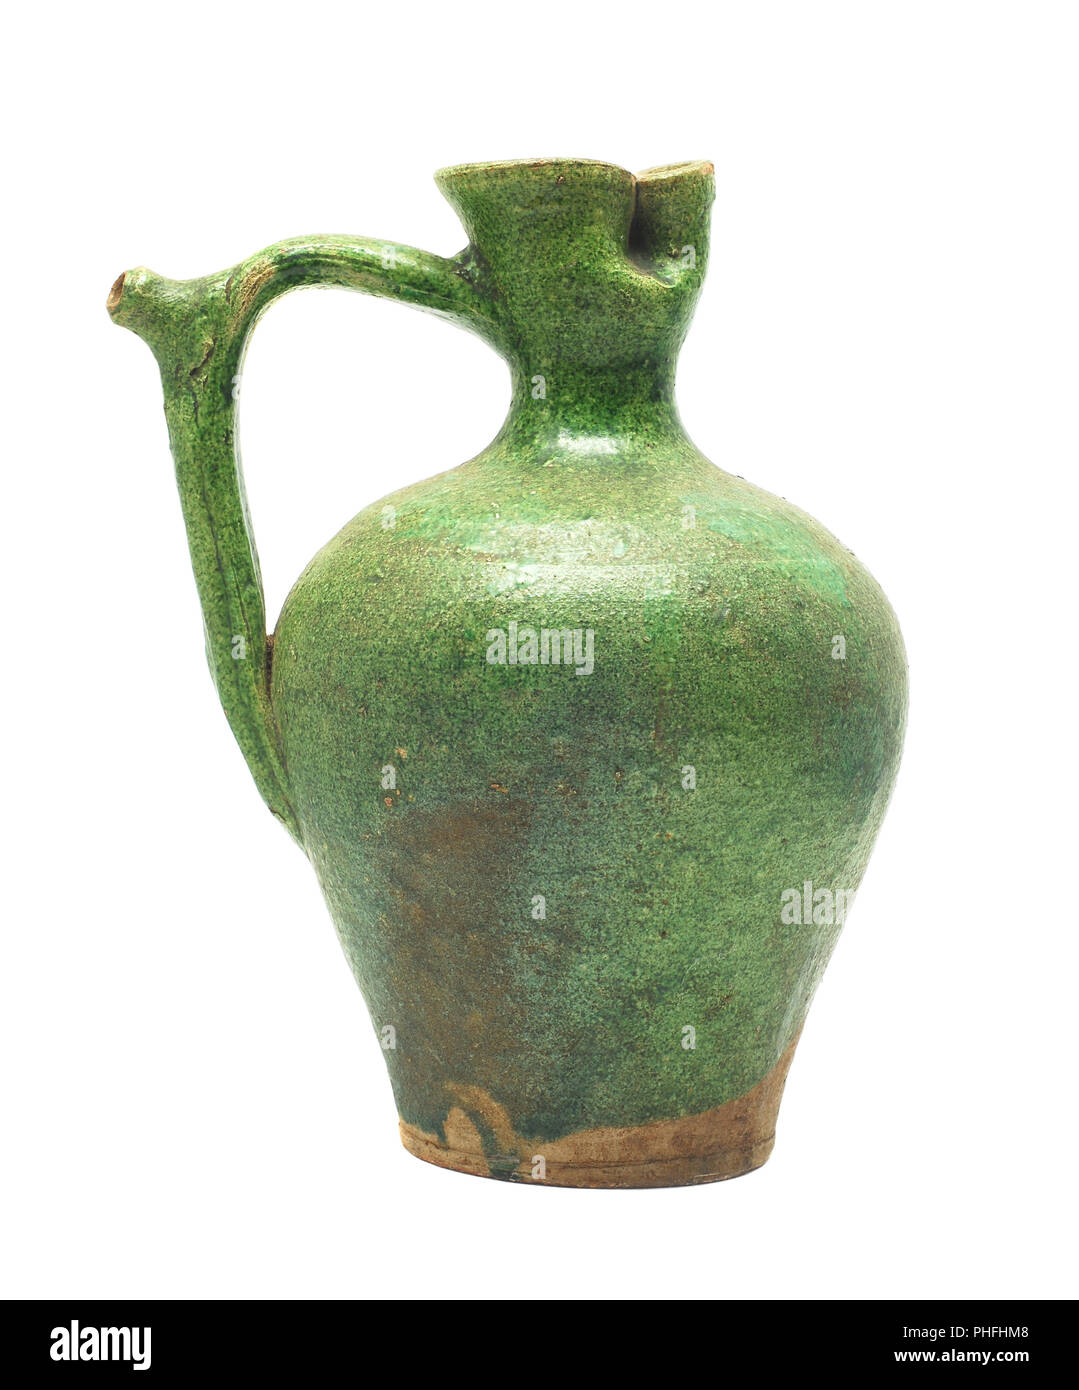 ceramic pitcher isolated on white Stock Photo